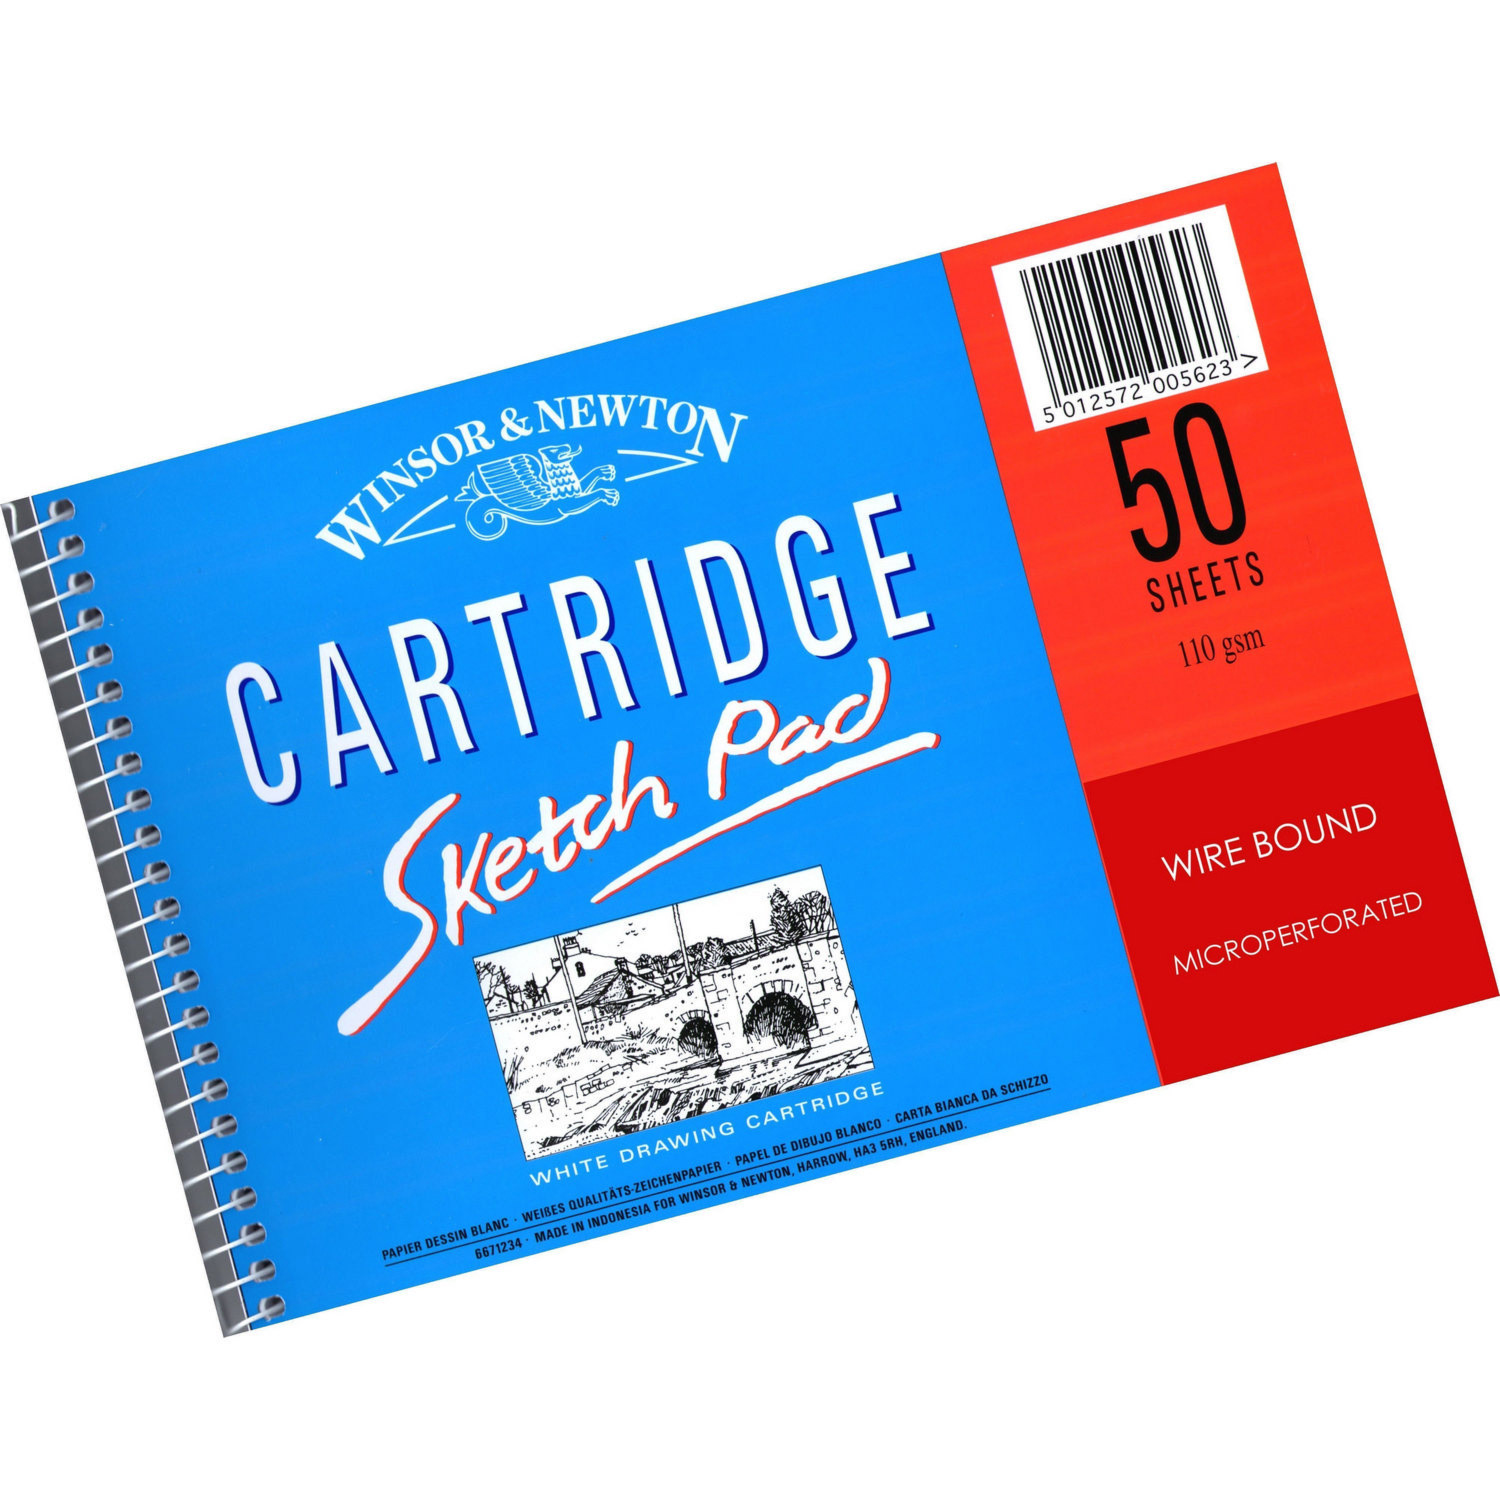 Winsor & Newton Cartridge A4 Sketch Pad 50 Sheets 110gsm Image